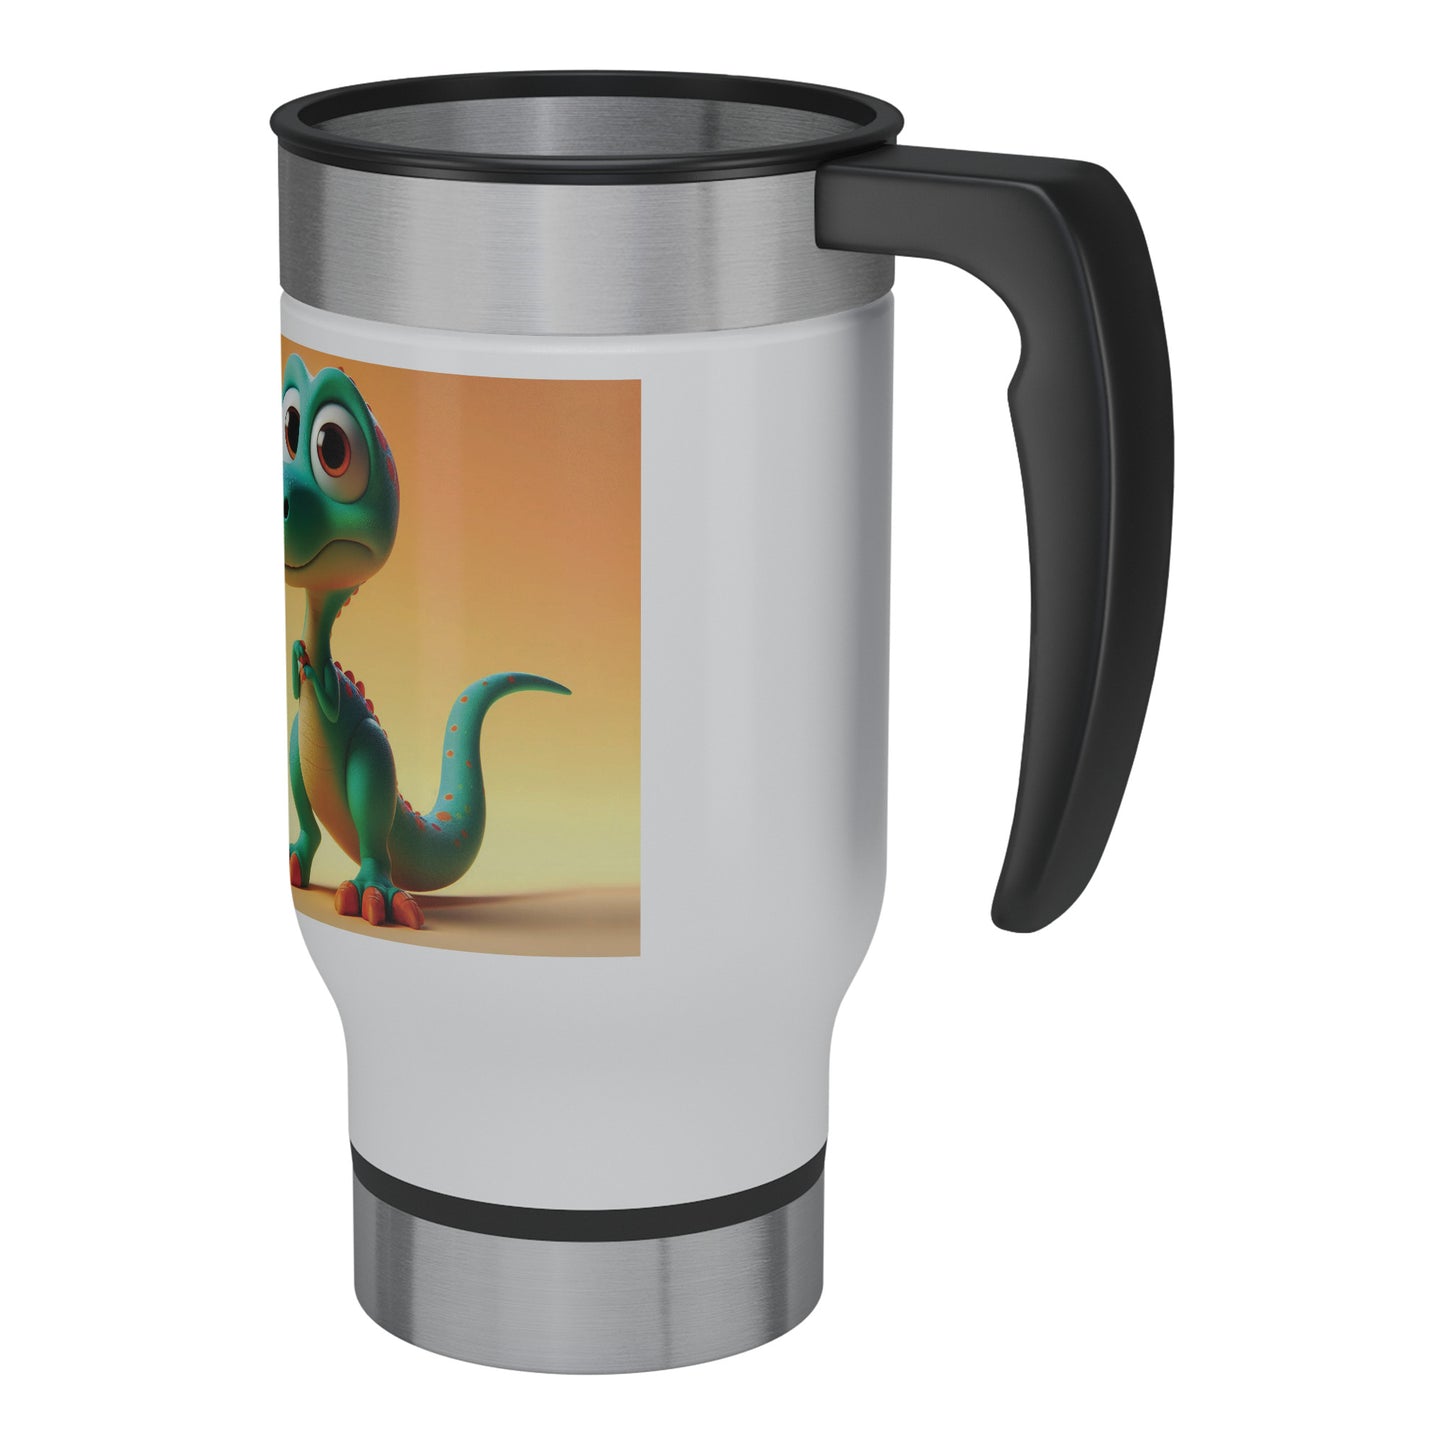 Adorable & Charming Dinosaurs - Travel Mug - Dinosaur #14